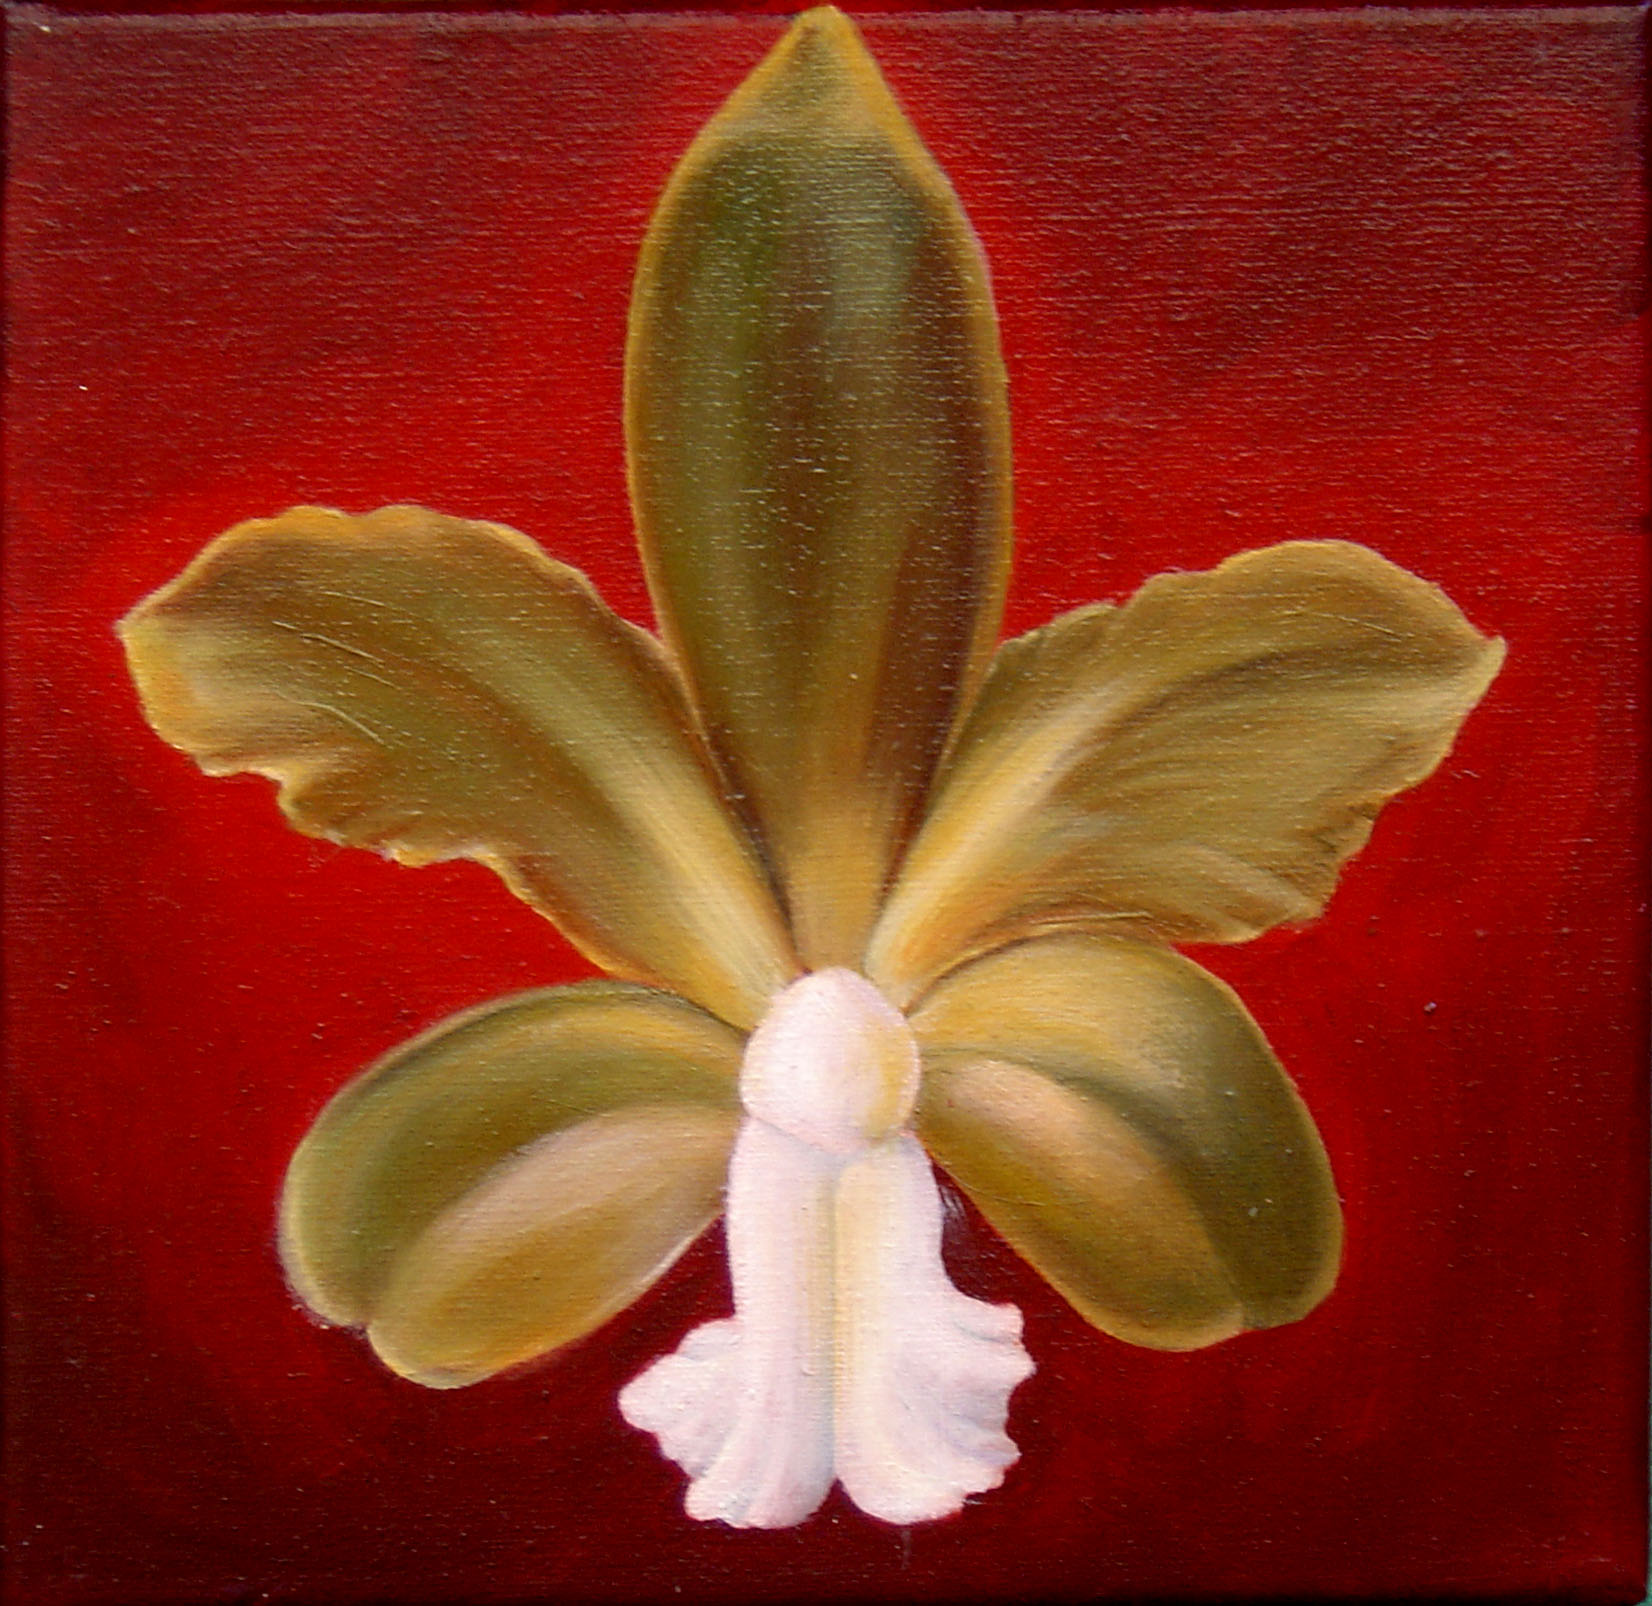 Intercourse-Orchid (20×20)cm oil on canvas